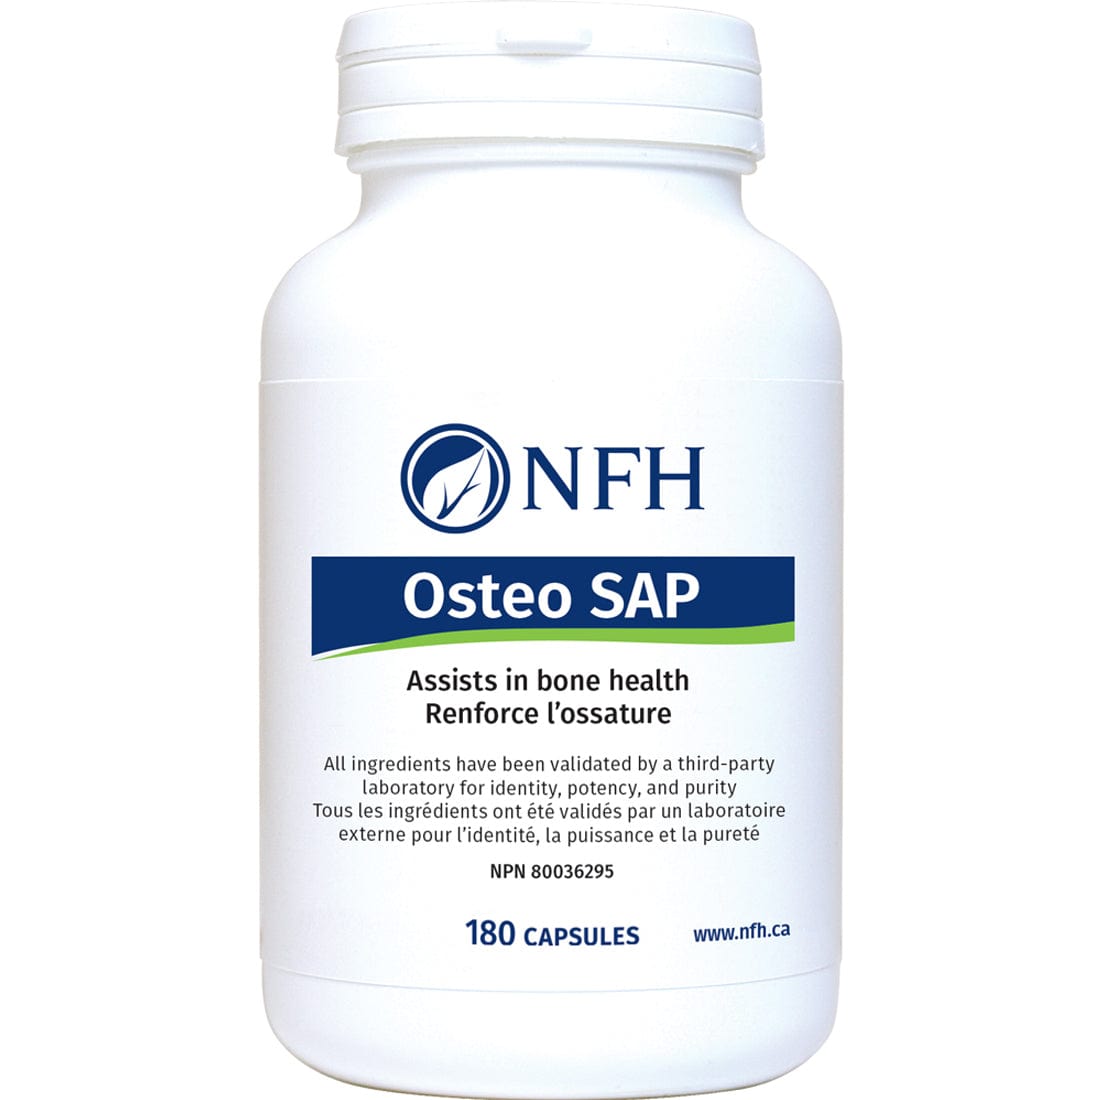 NFH Osteo SAP, 180 Capsules